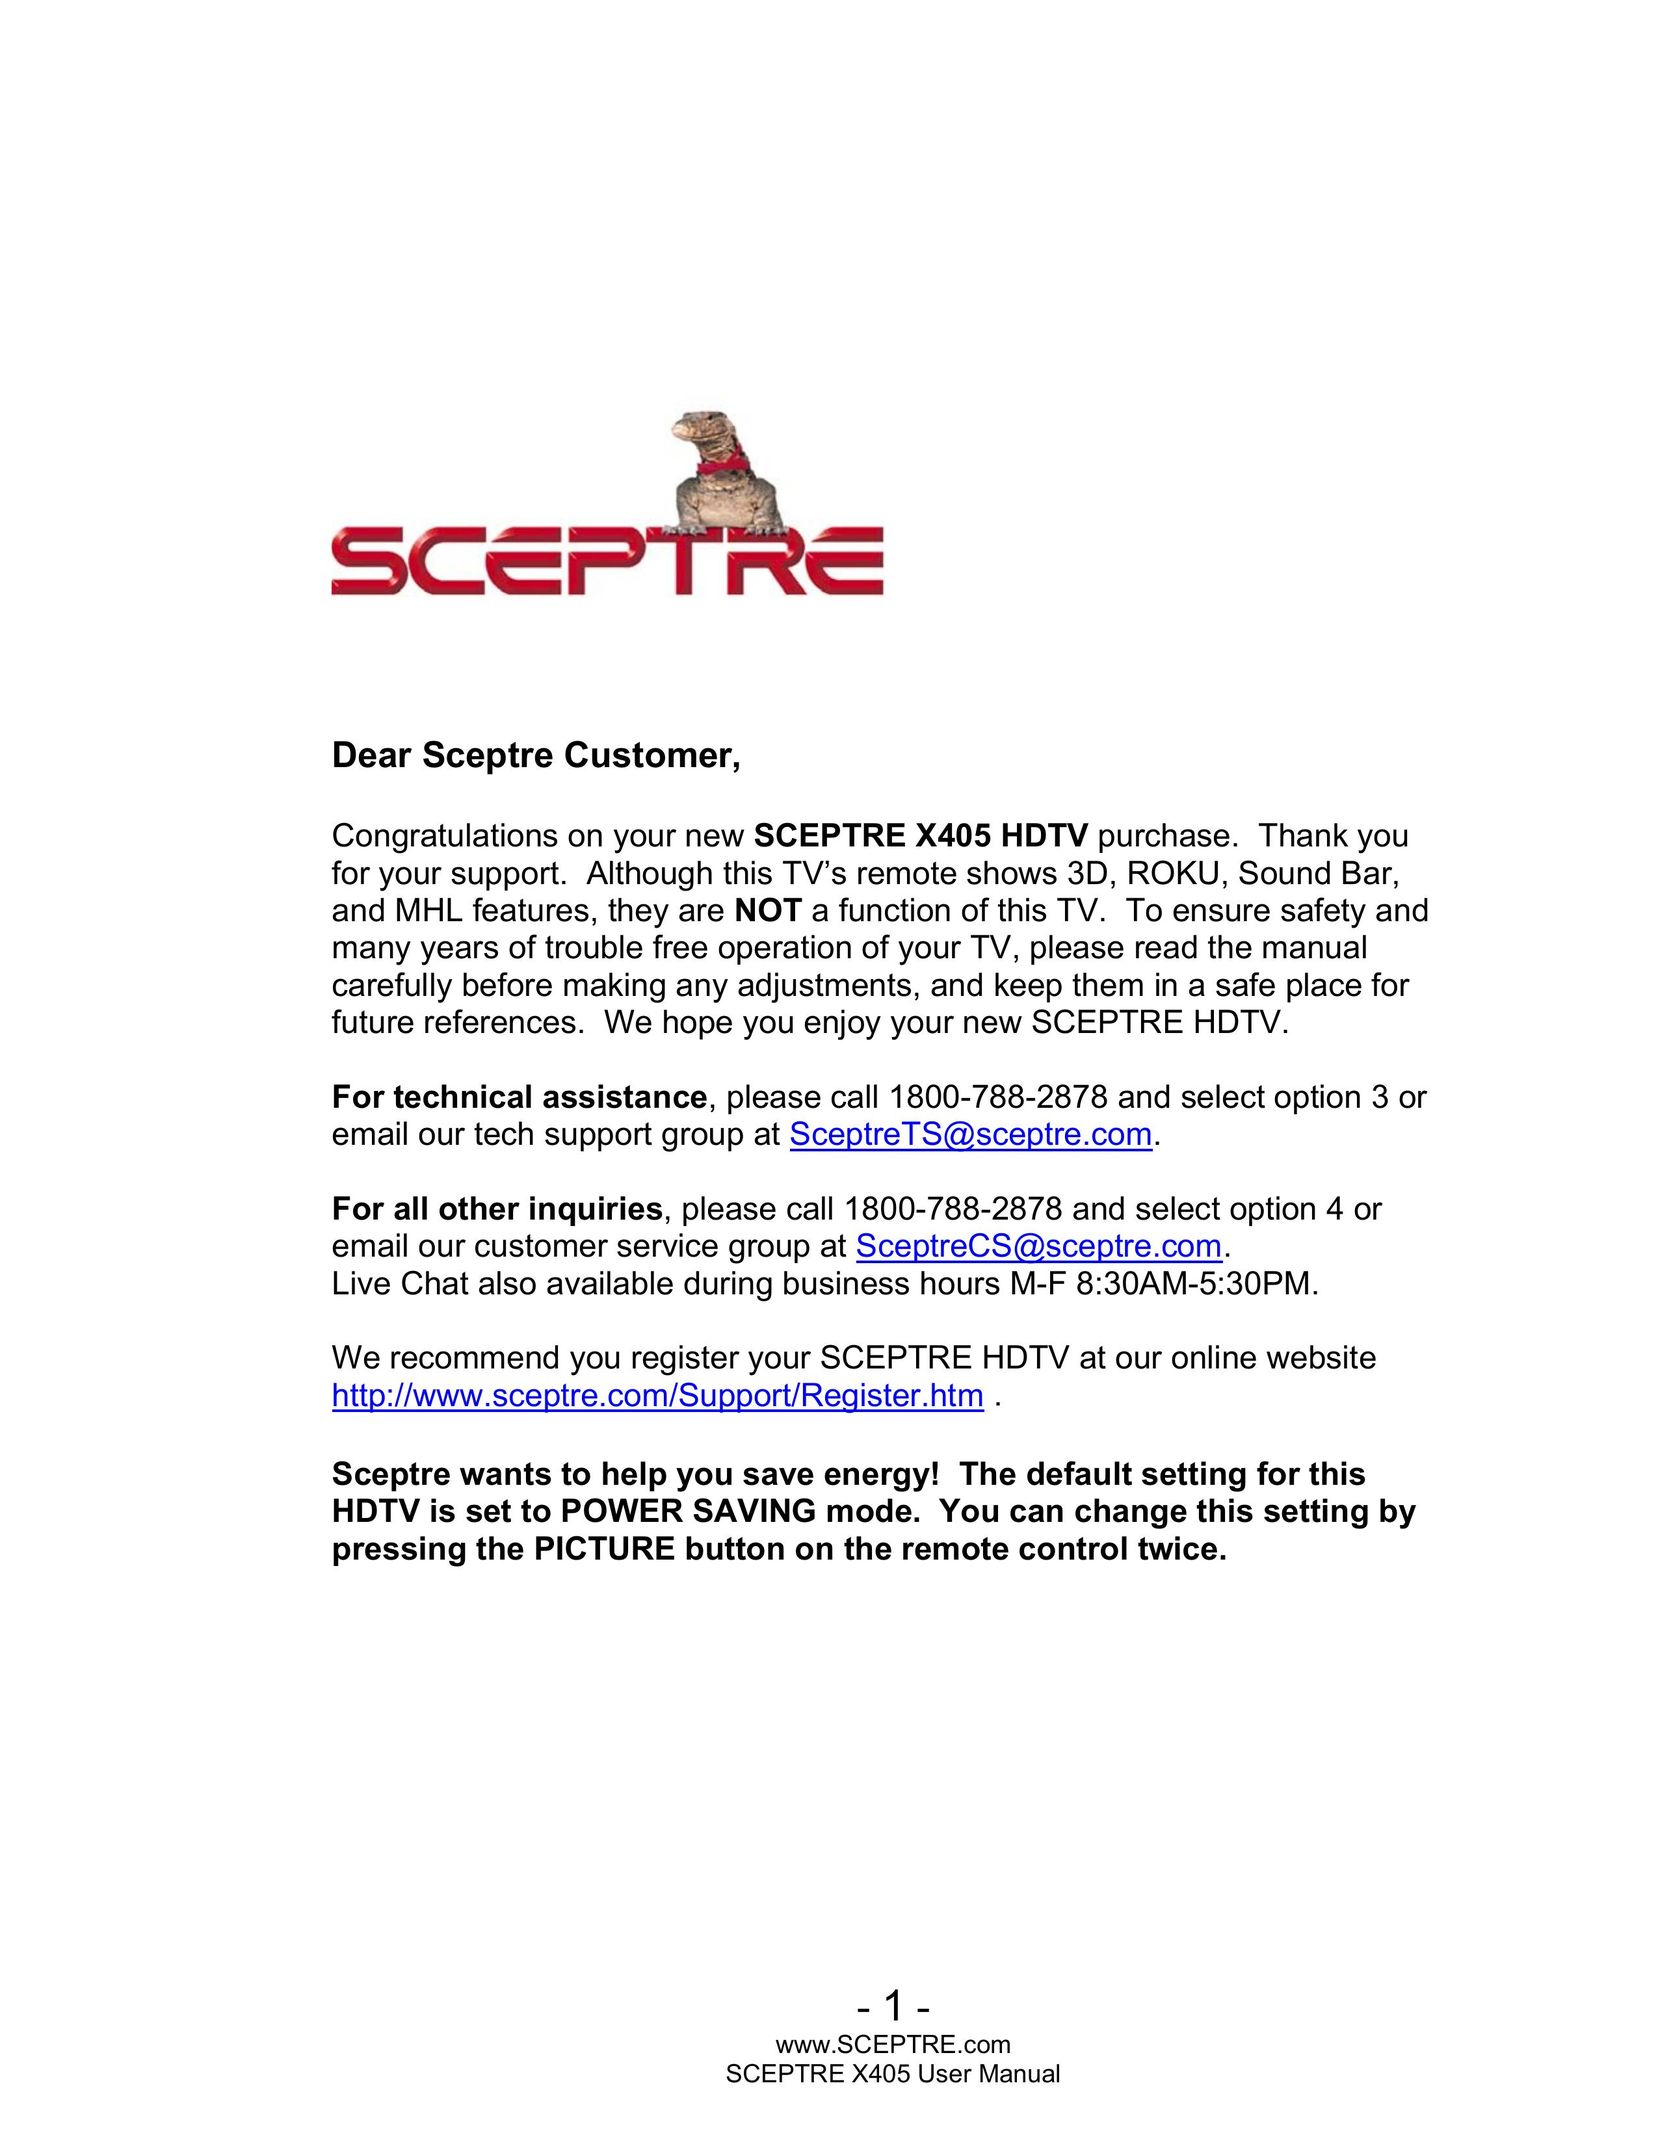 Sceptre Technologies SCEPTRE X405 HDTV Flat Panel Television User Manual